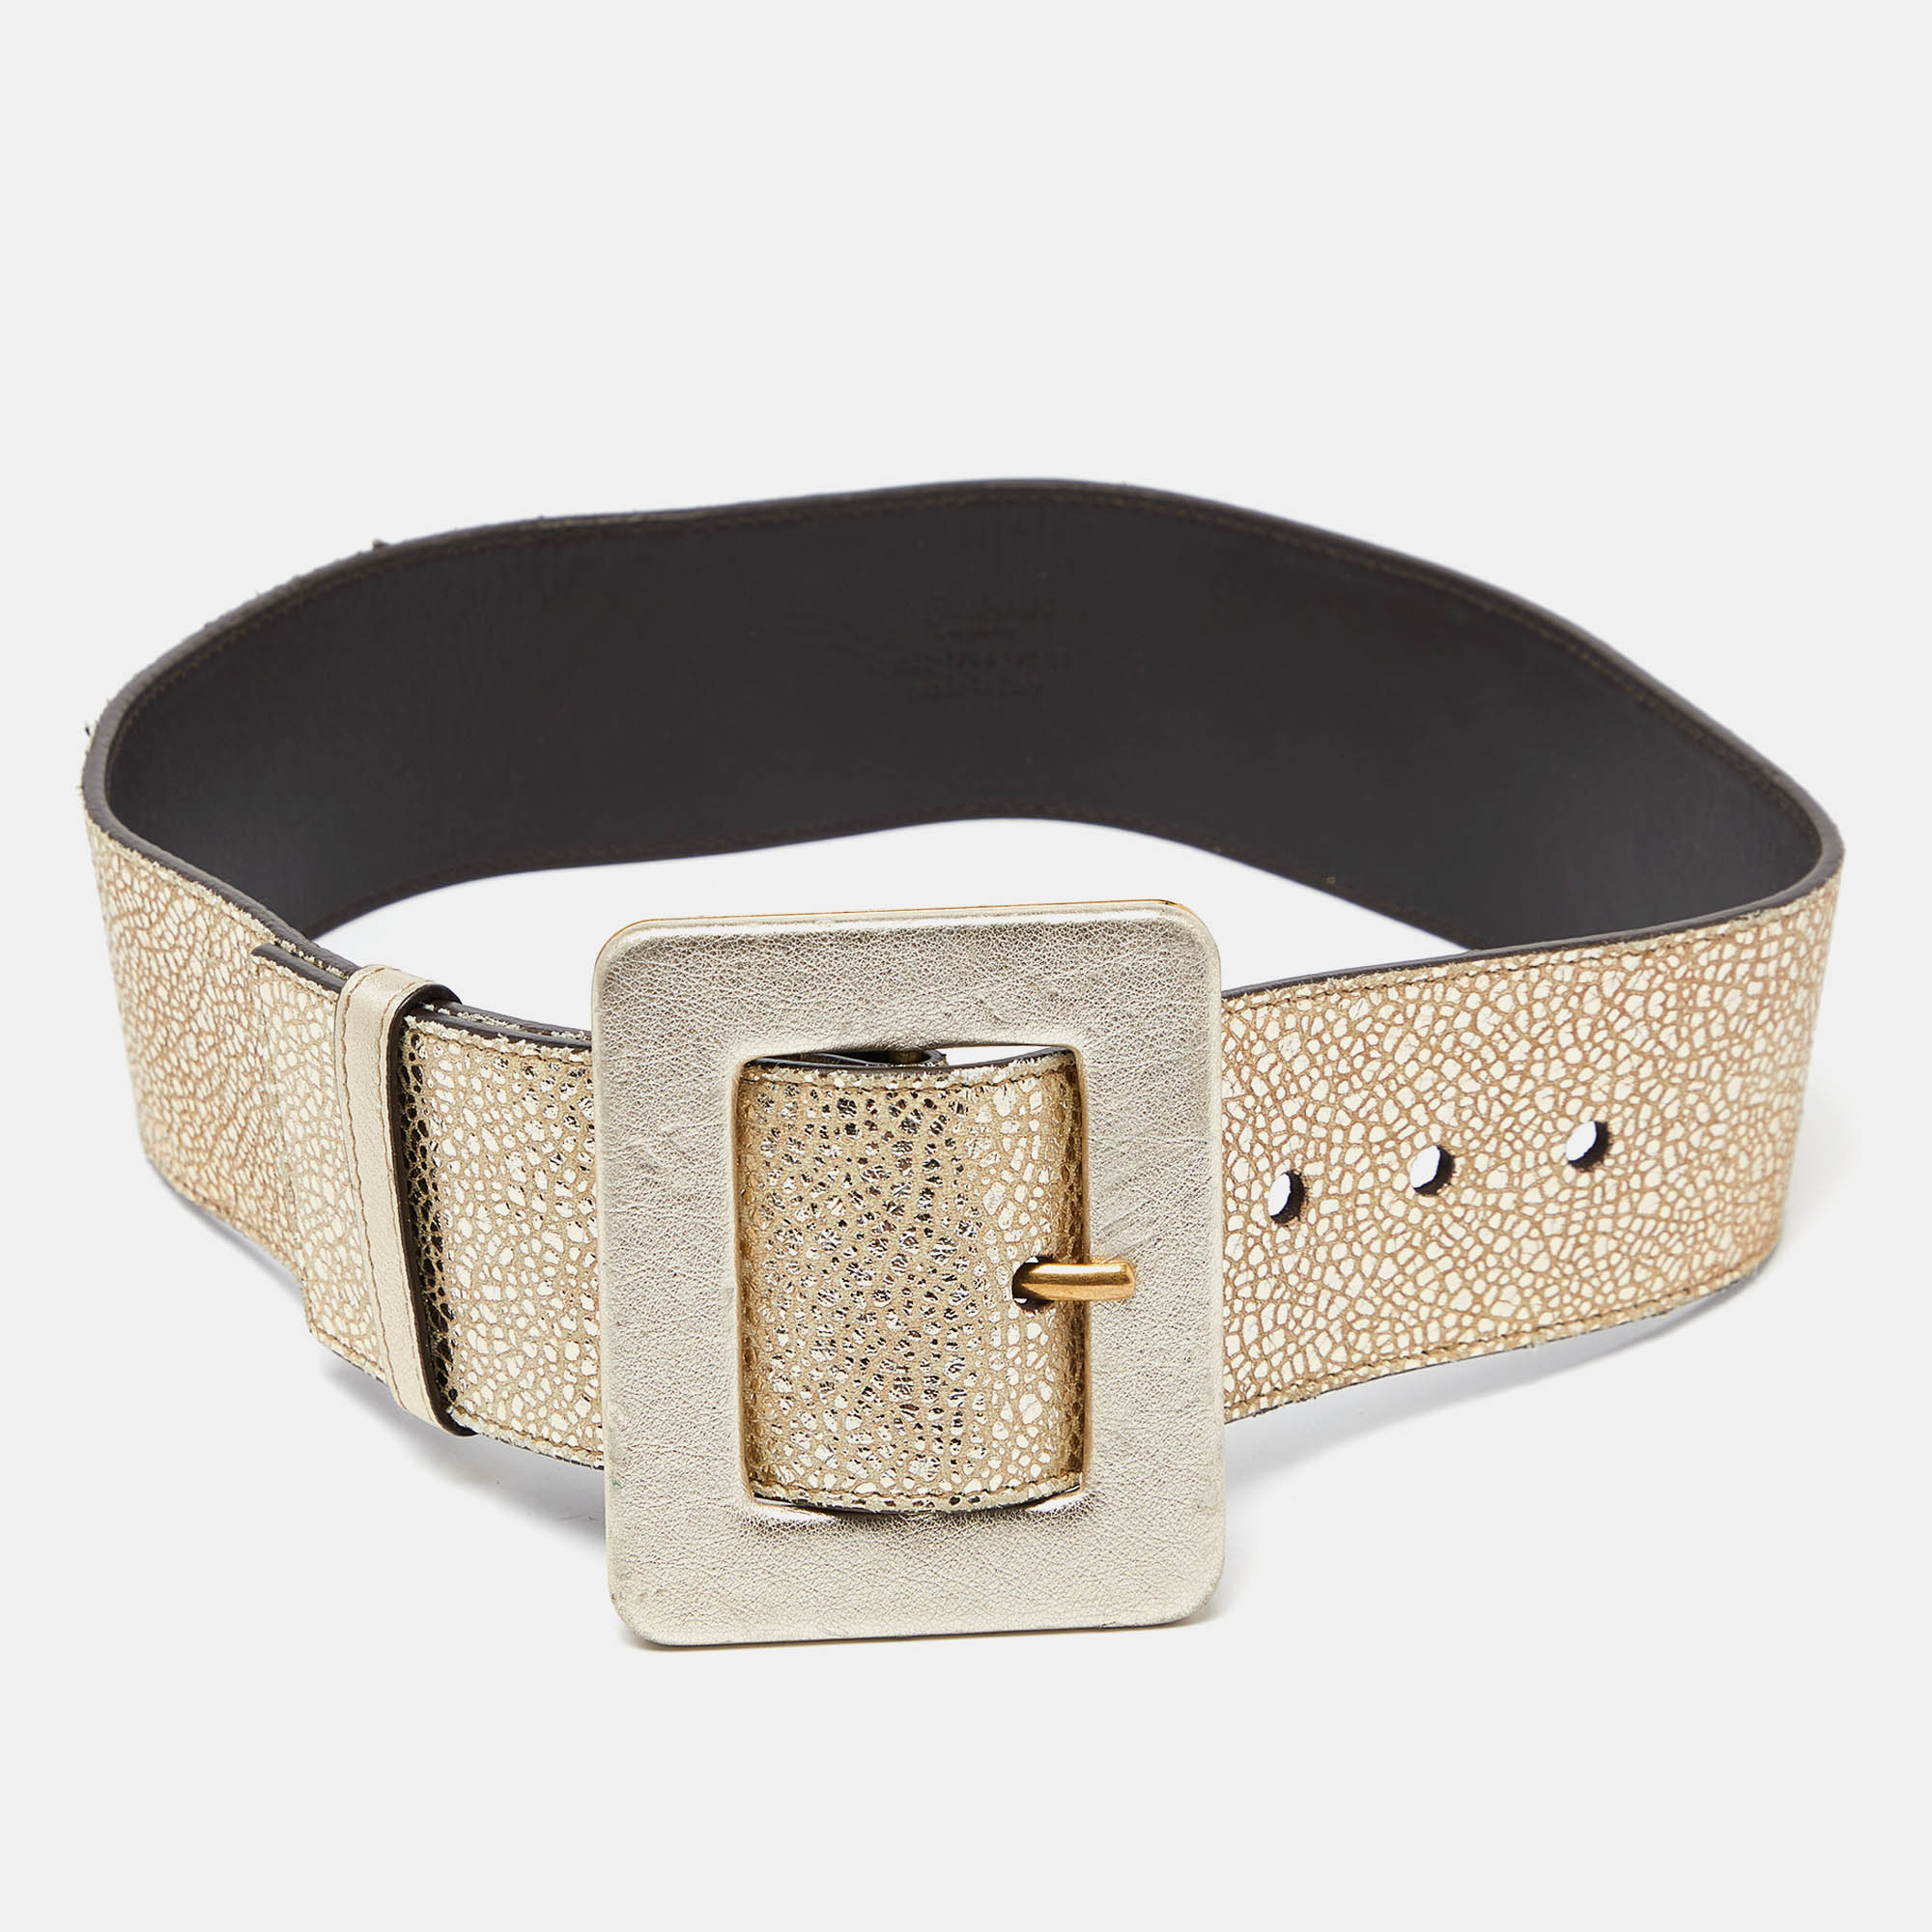 Yves saint laurent gold leather buckle waist belt 70cm